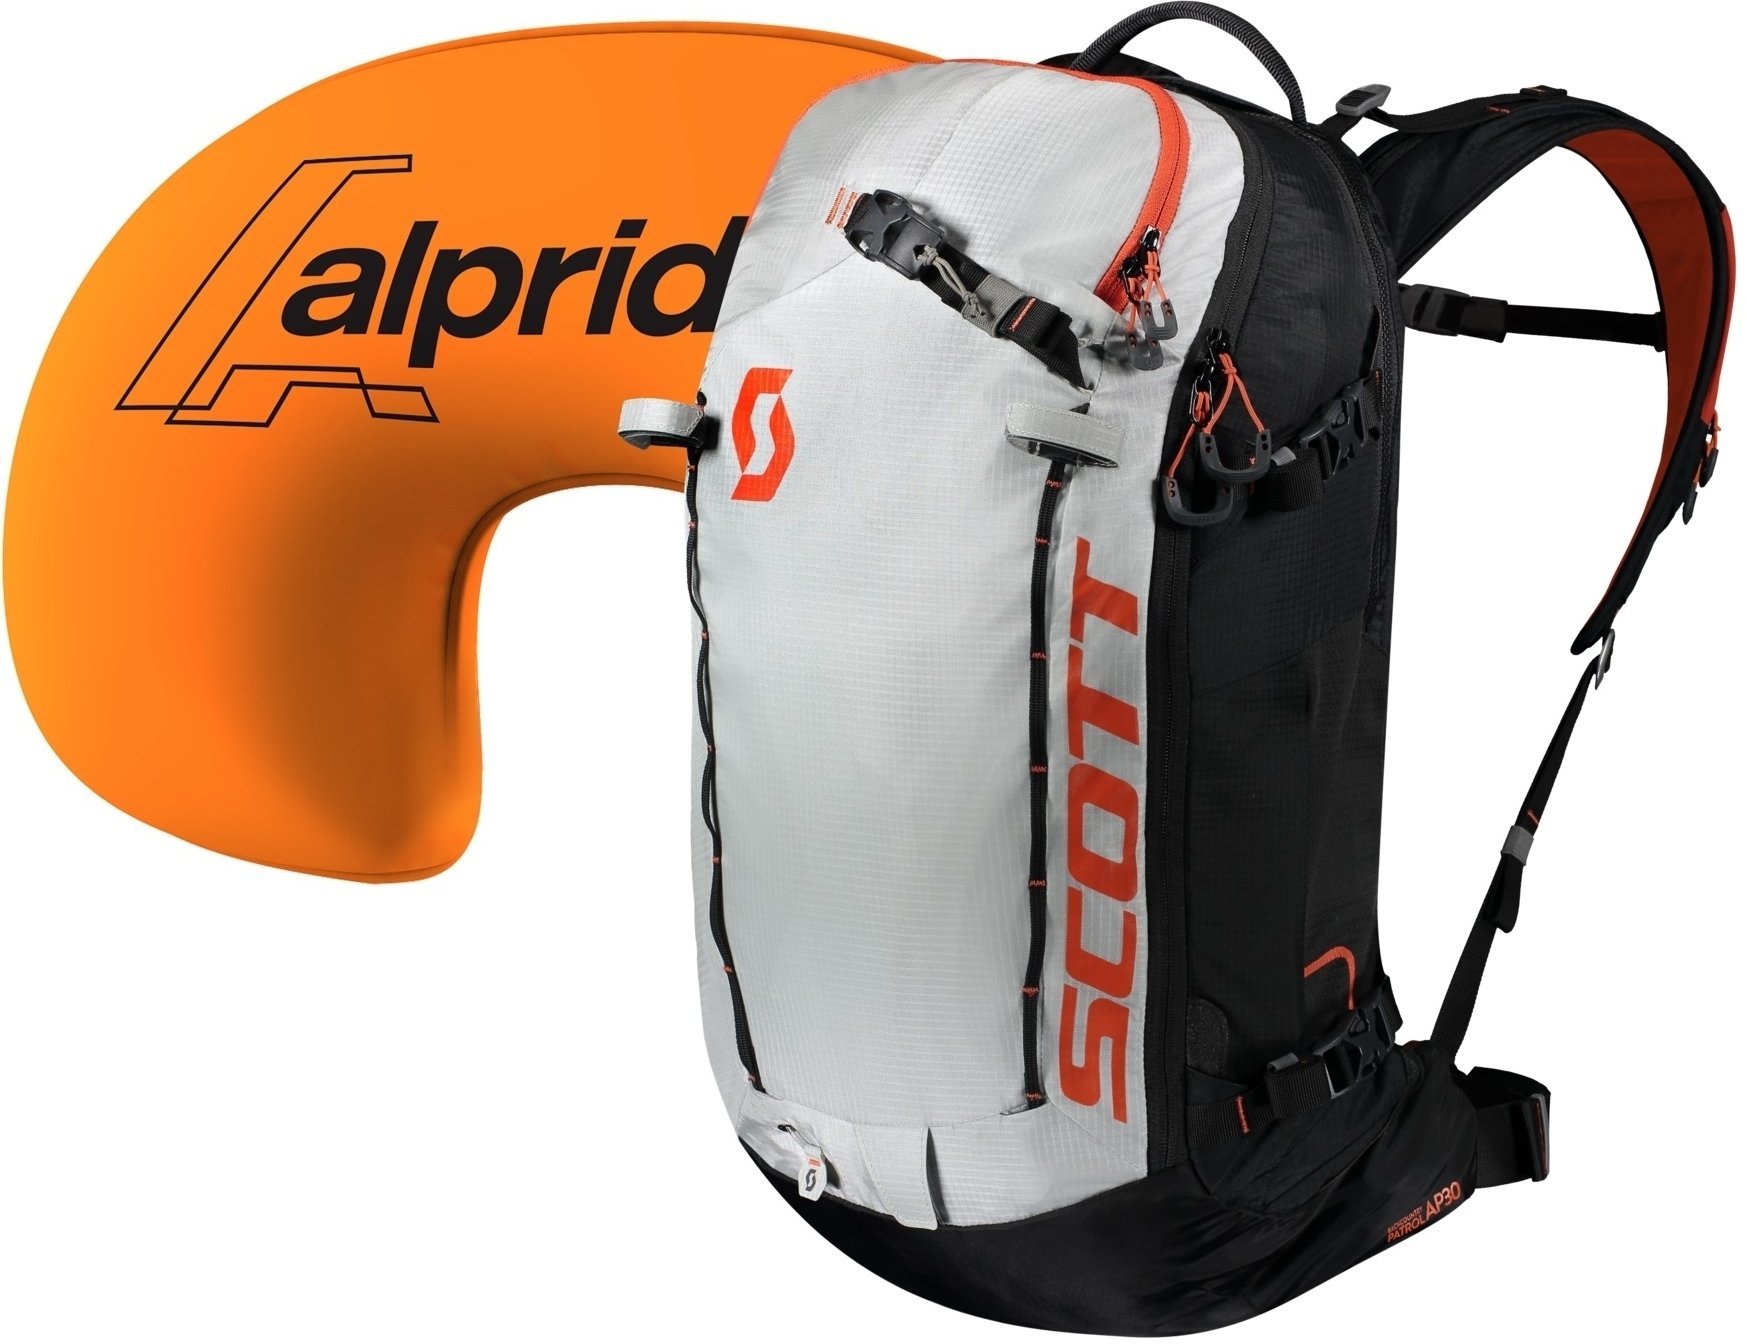 Ski Travel Bag Scott Patrol E1 Kit Black/Tangerine Orange Ski Travel Bag